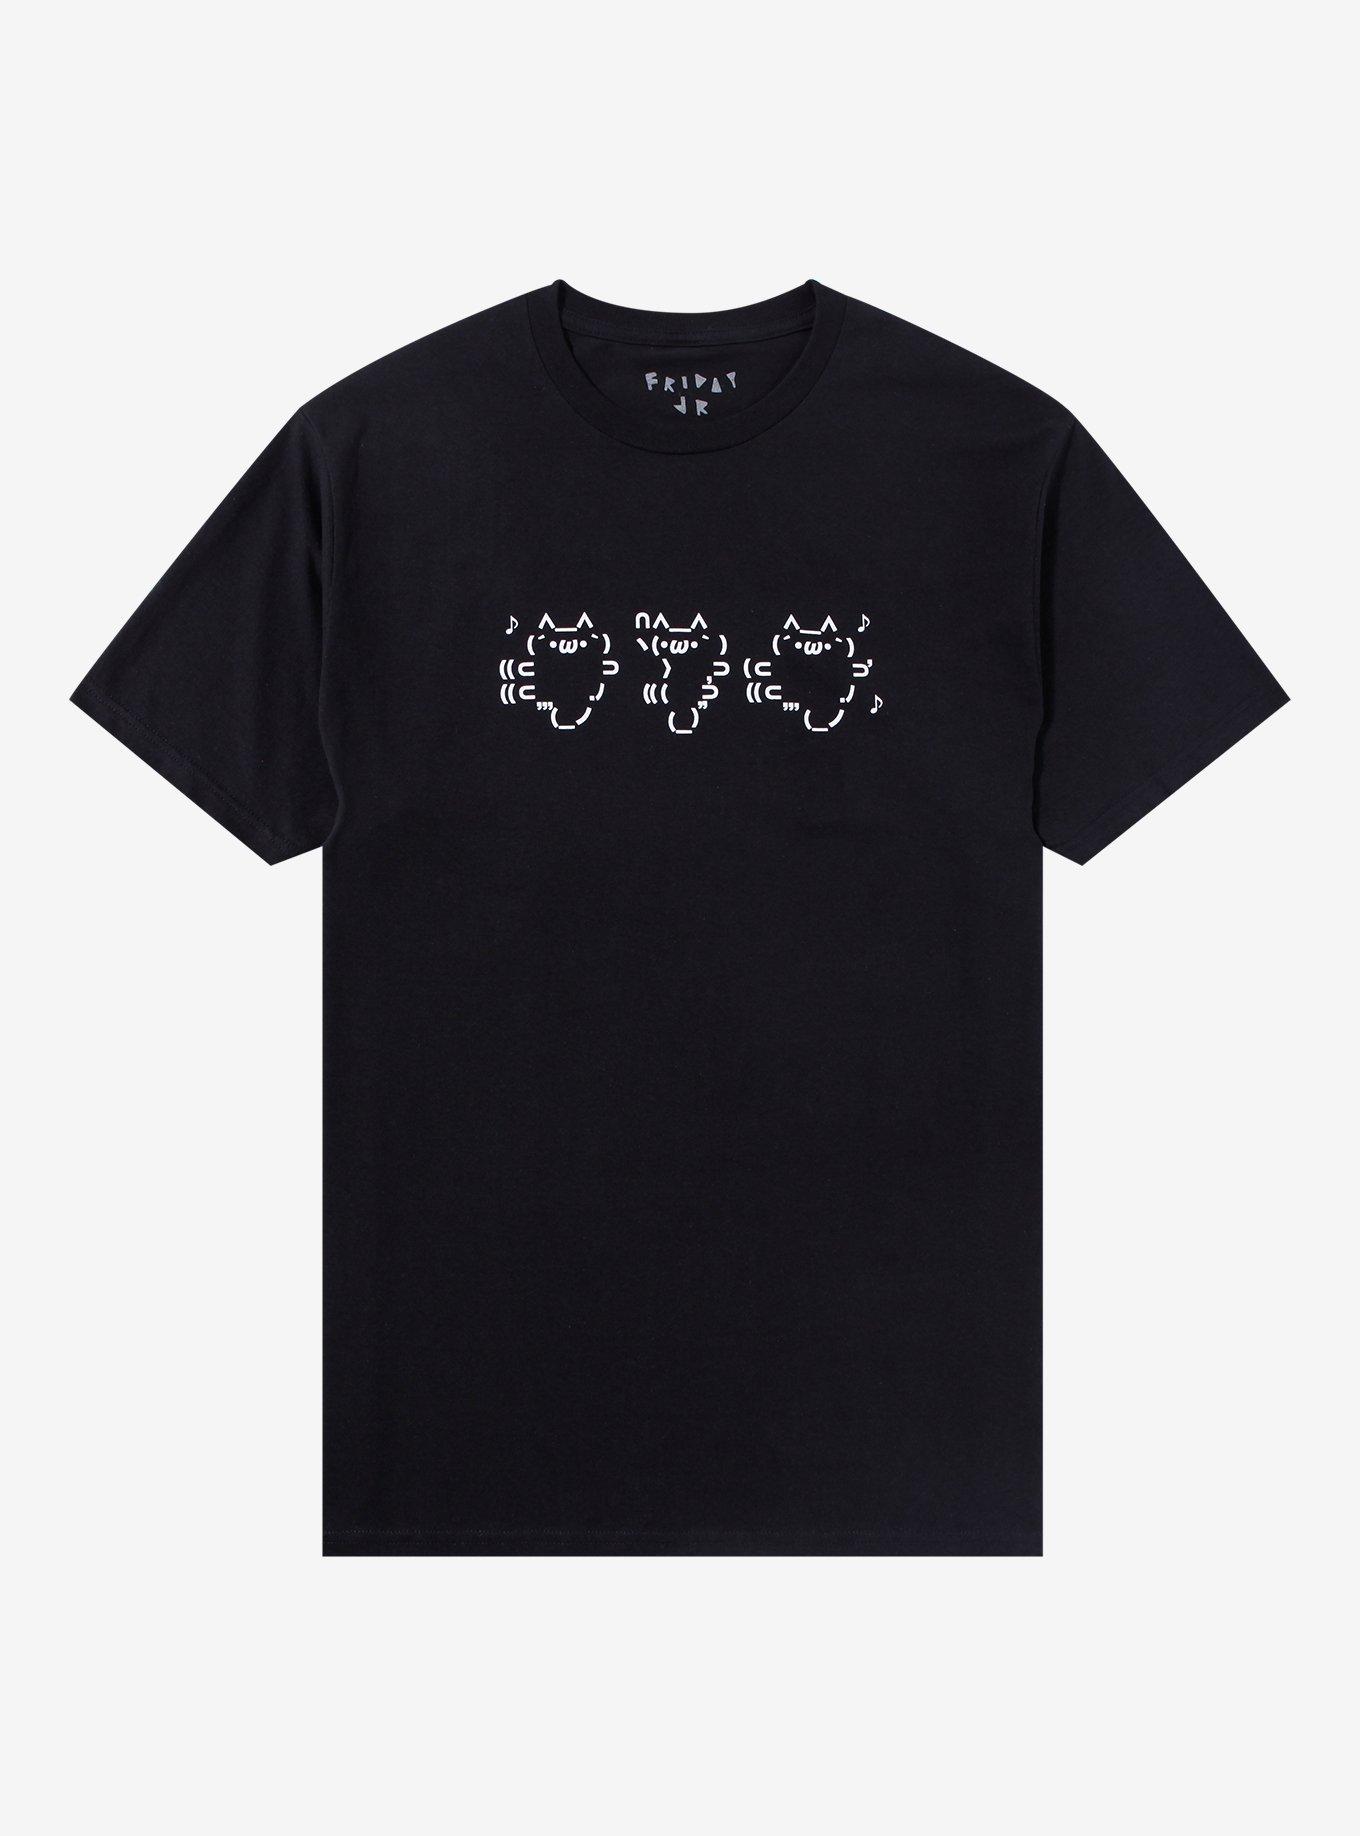 Cat Emoticons T-Shirt By Friday Jr, , hi-res